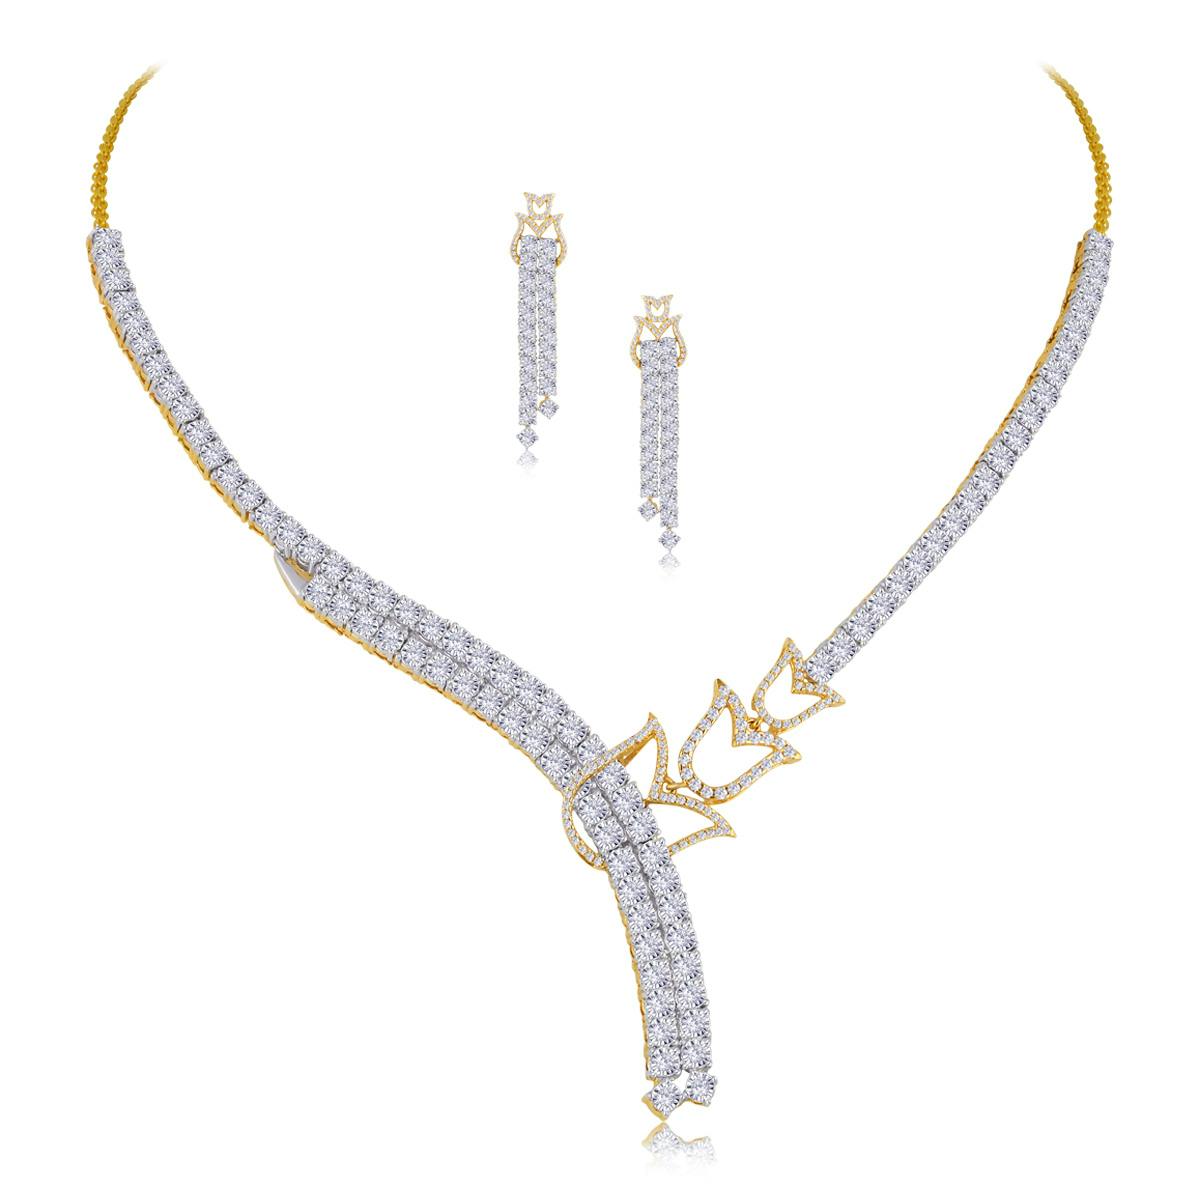 Jacqueline diamond necklace